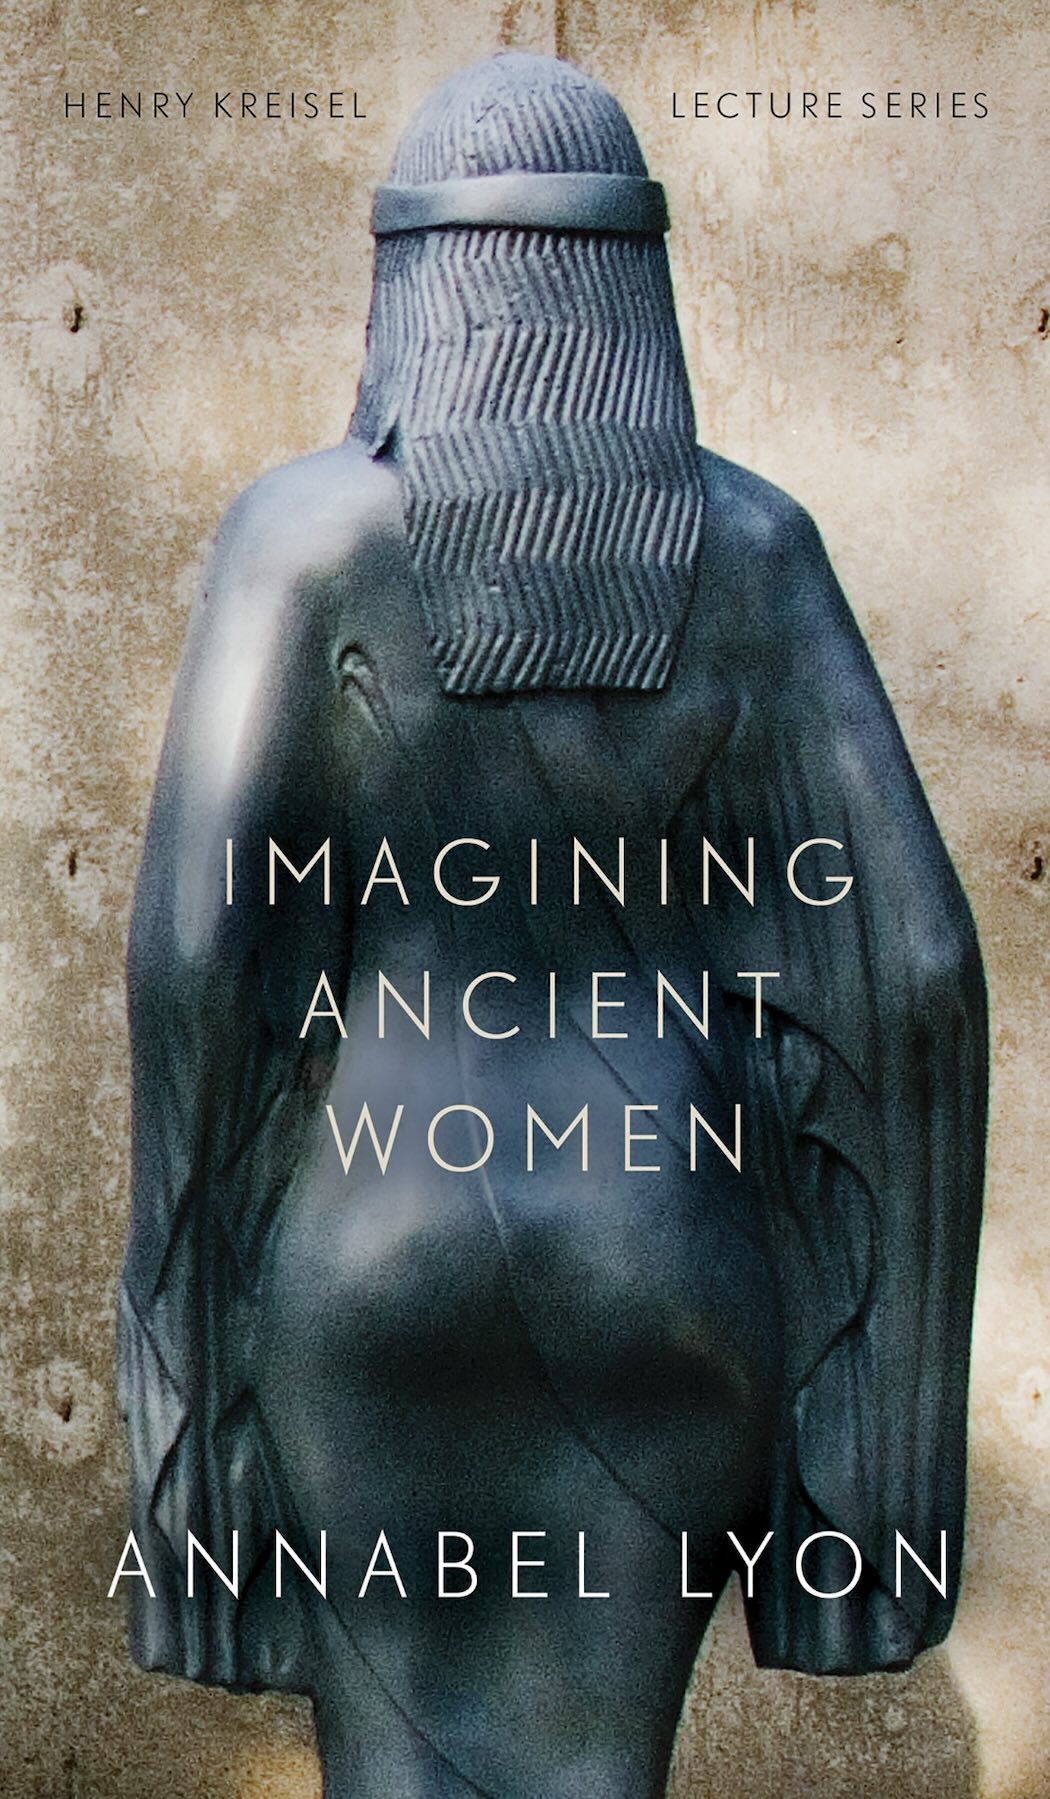 Cover Image of Annabel Lyon's Kreisel Publication Titled Imagining Ancient Women